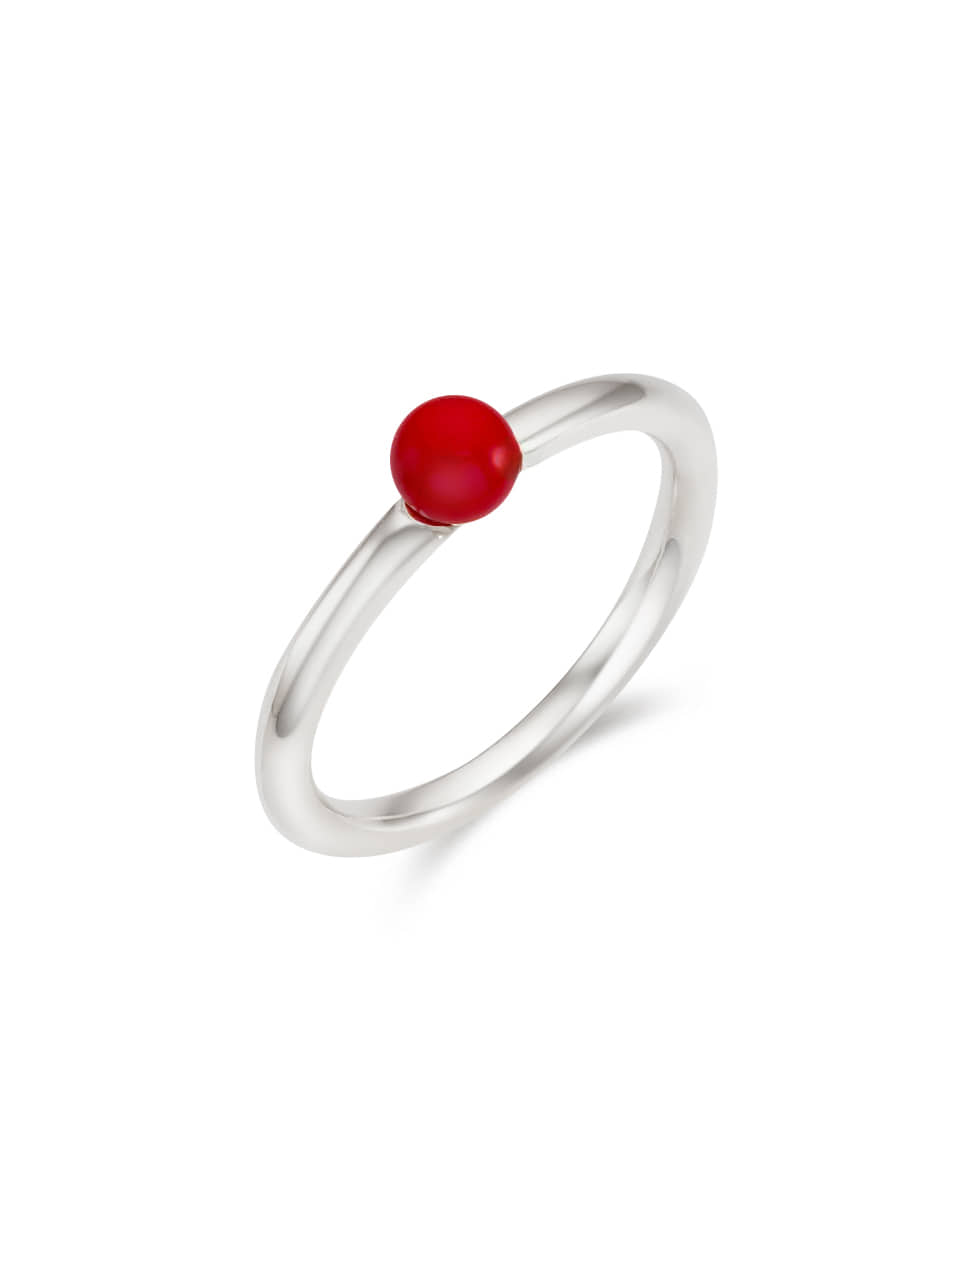 [silver925]redpop ball ring